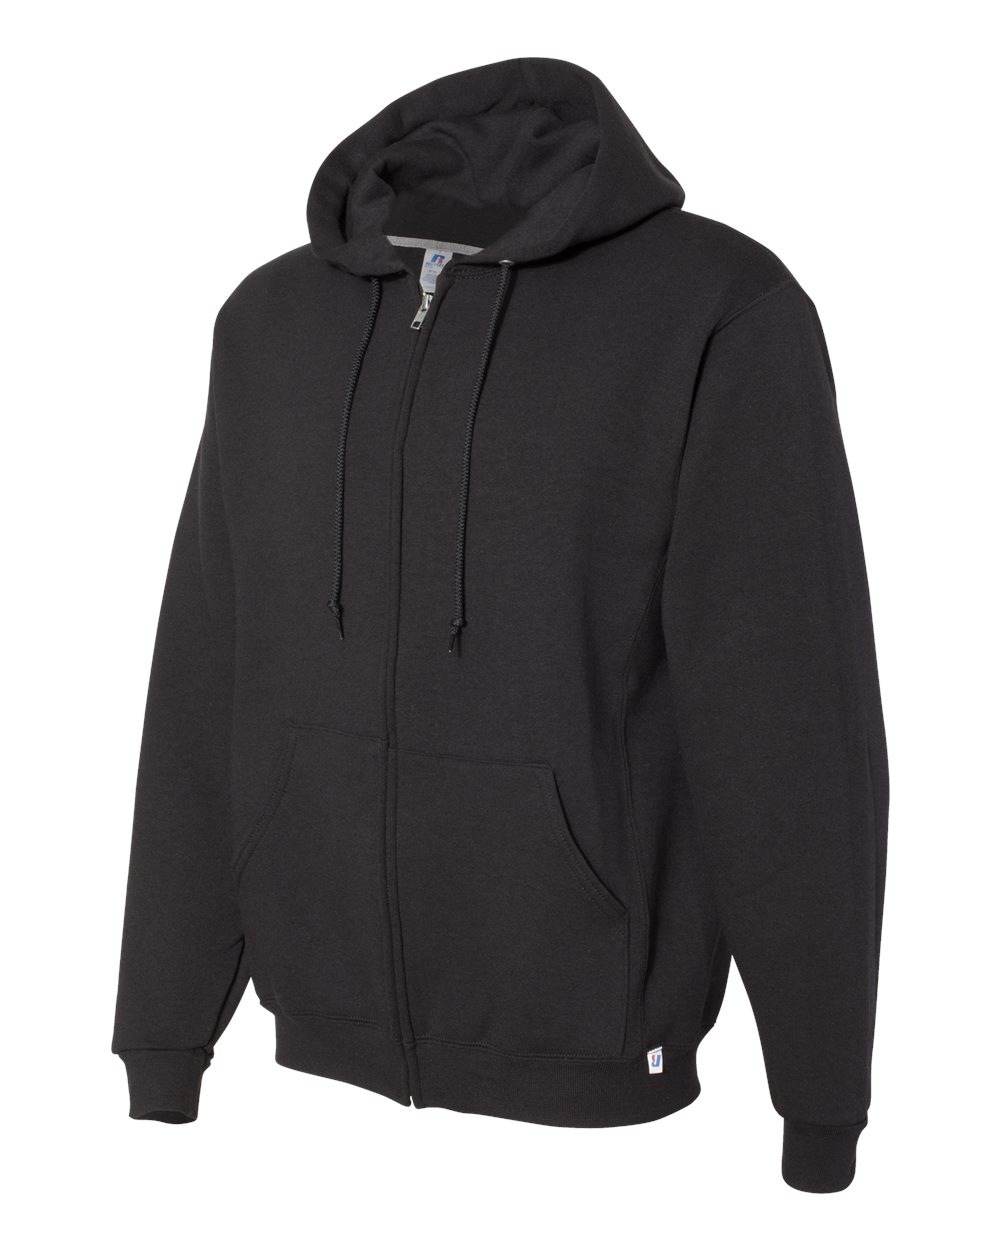 Russell Athletic 697HBM - Dri-Power® Fleece Full-Zip Hood